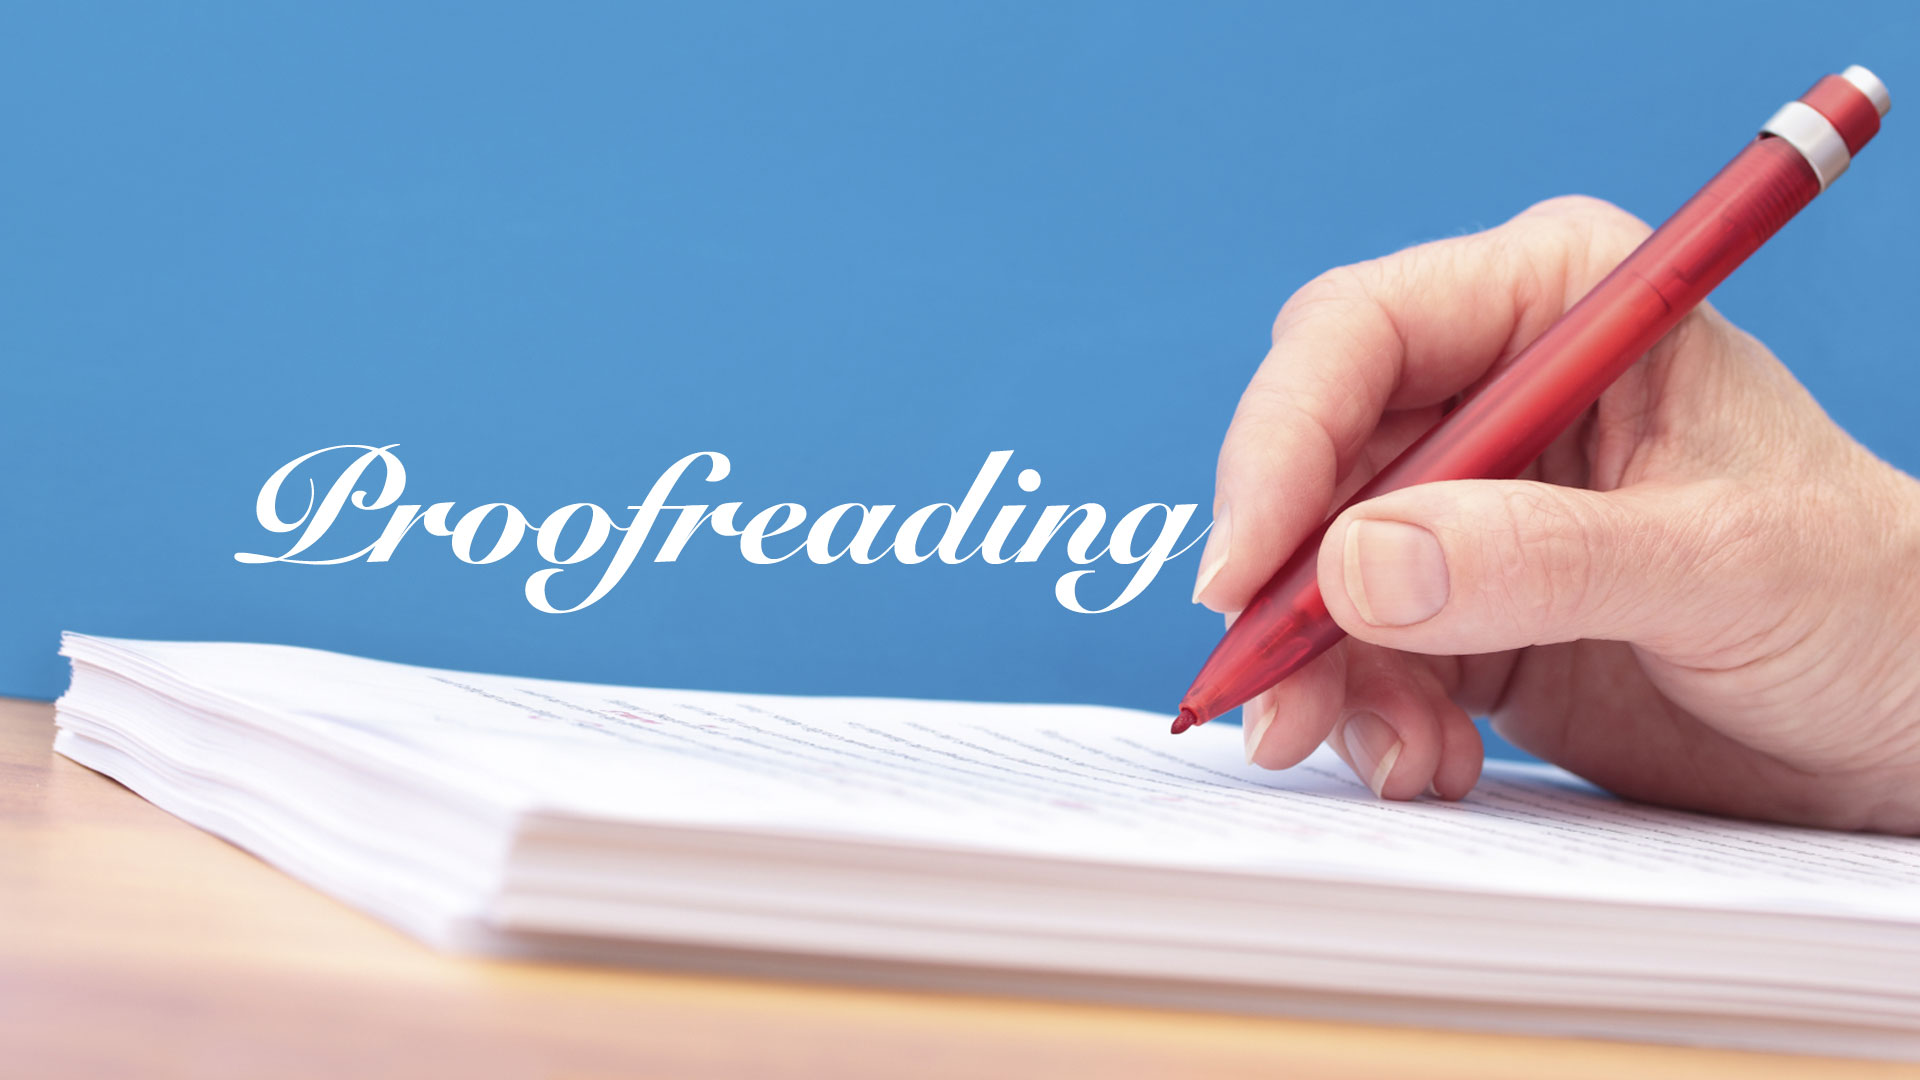 proofreading essay free